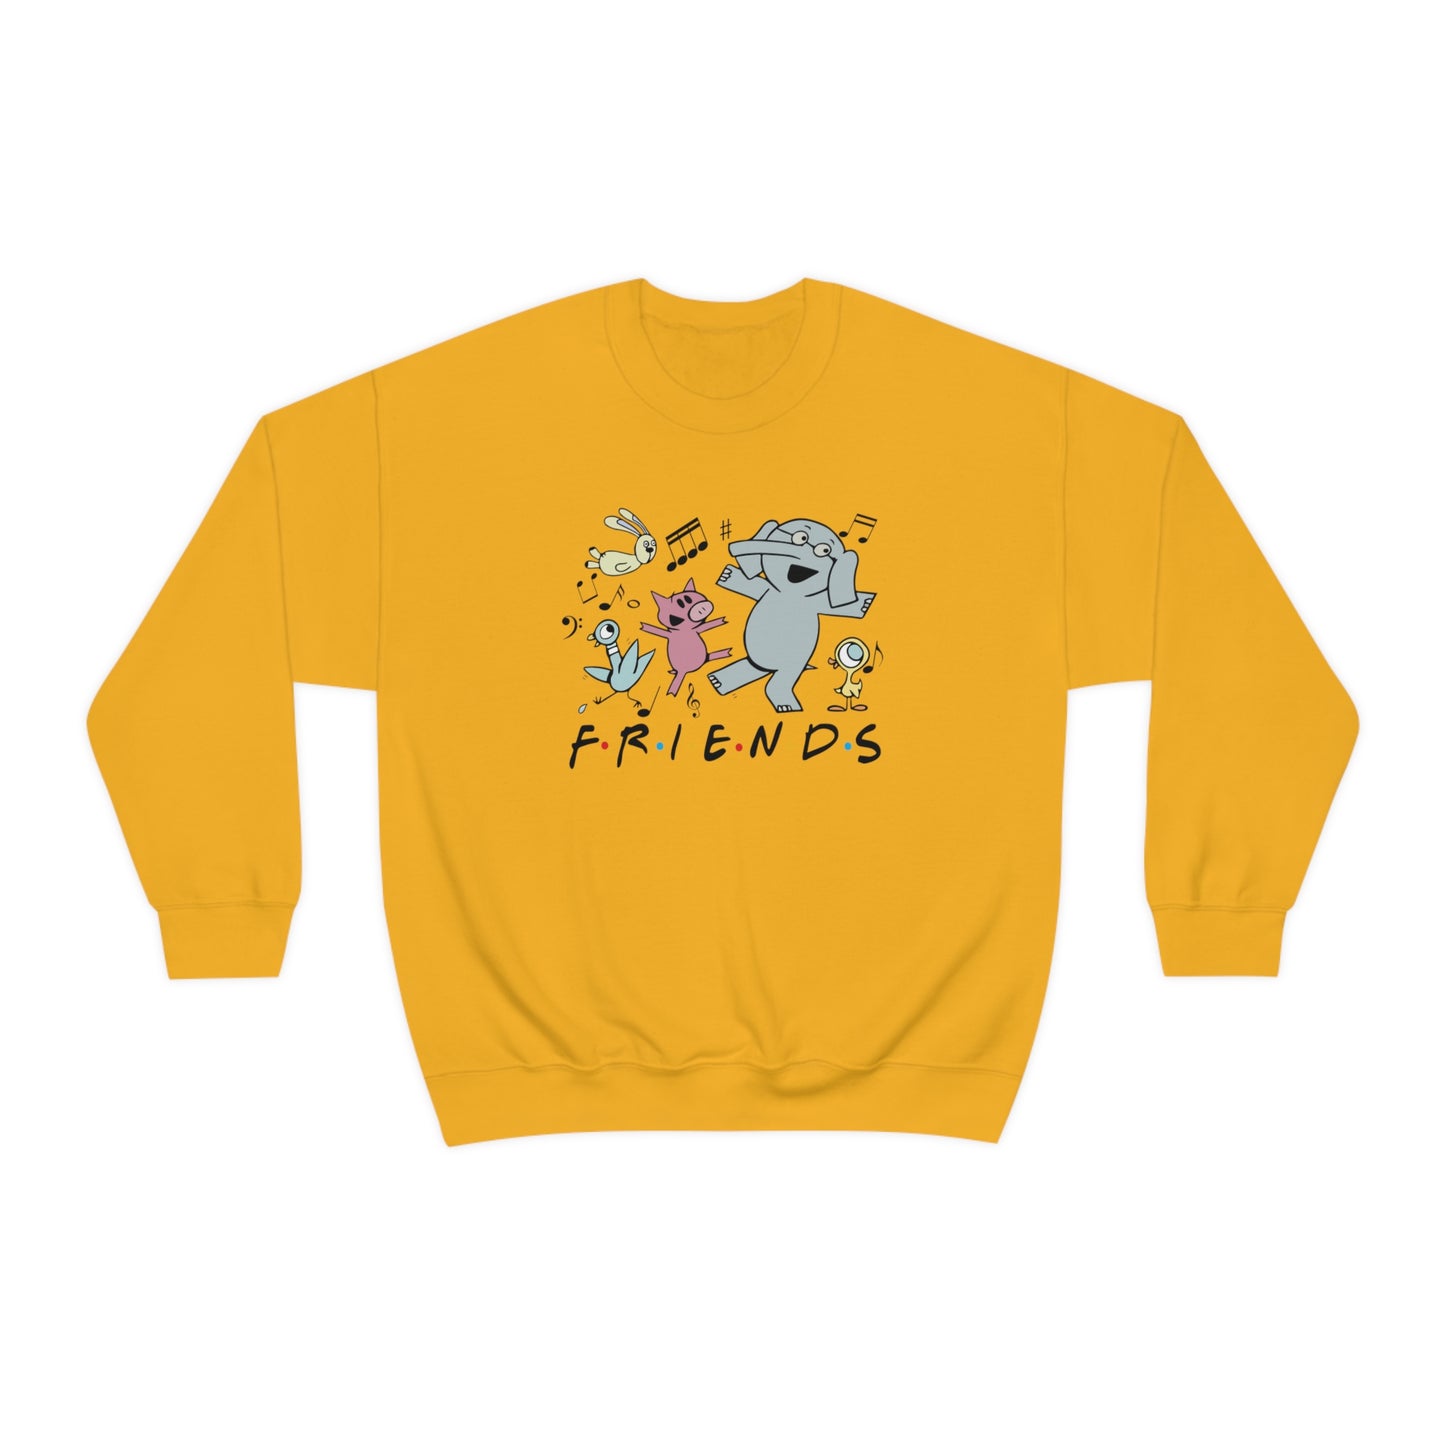 FRIENDS - Pig and Elephant Sweatshirt